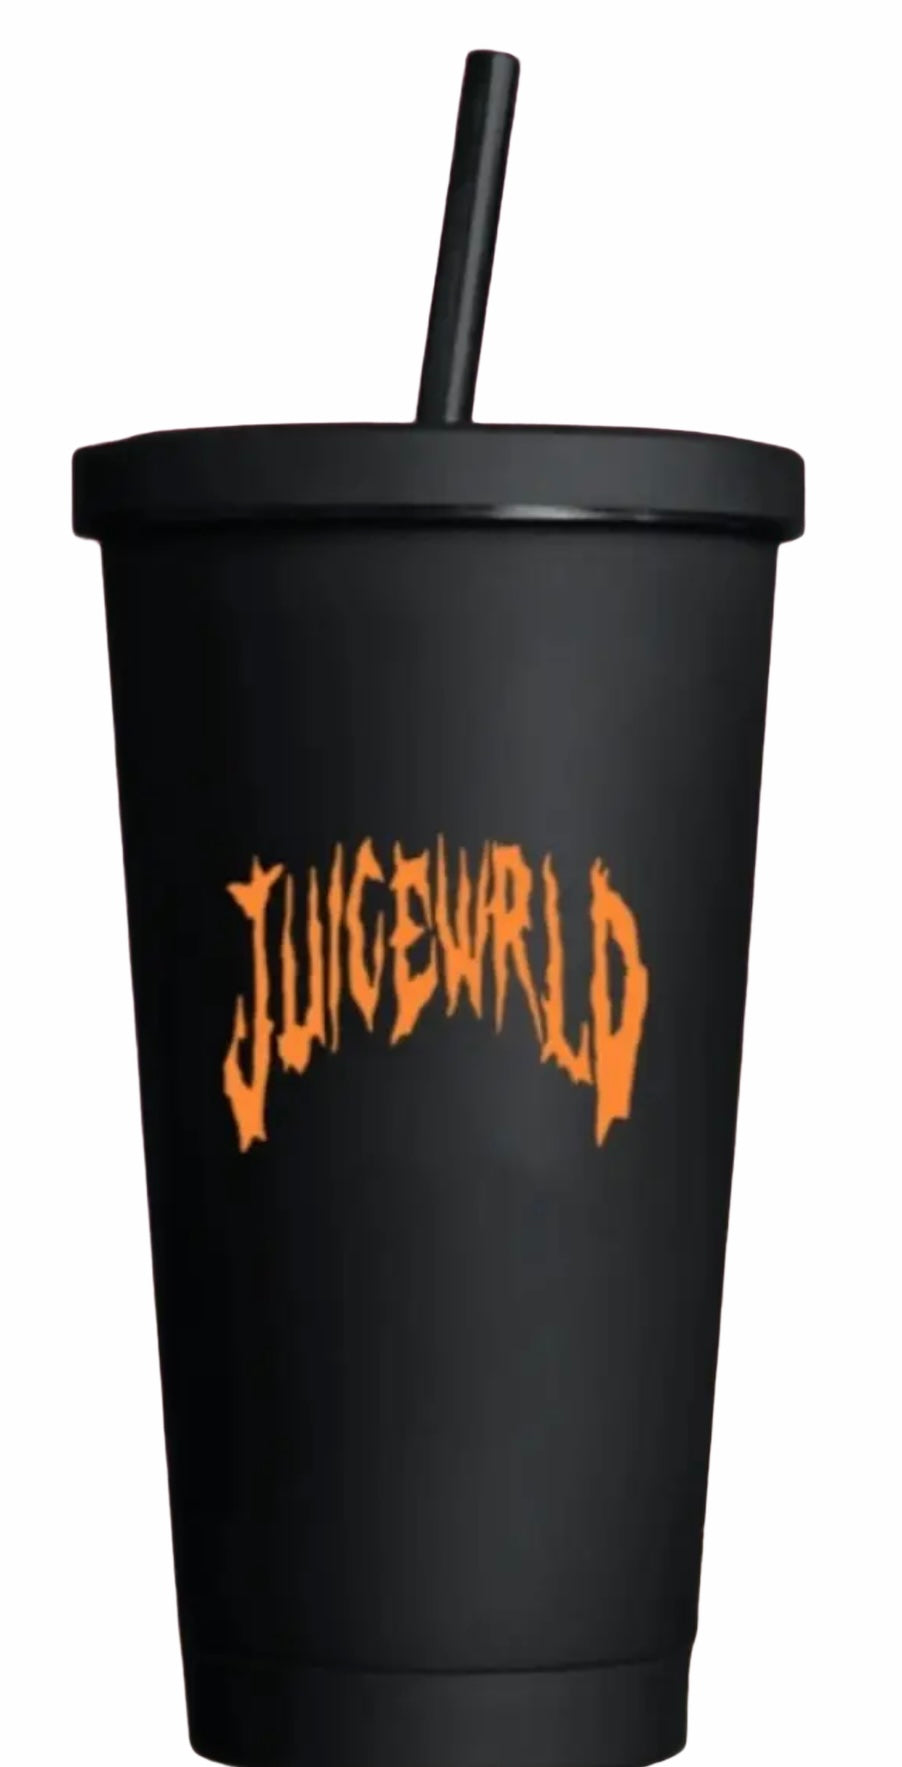 Juice WRLD Tumblr Cup (SS20)